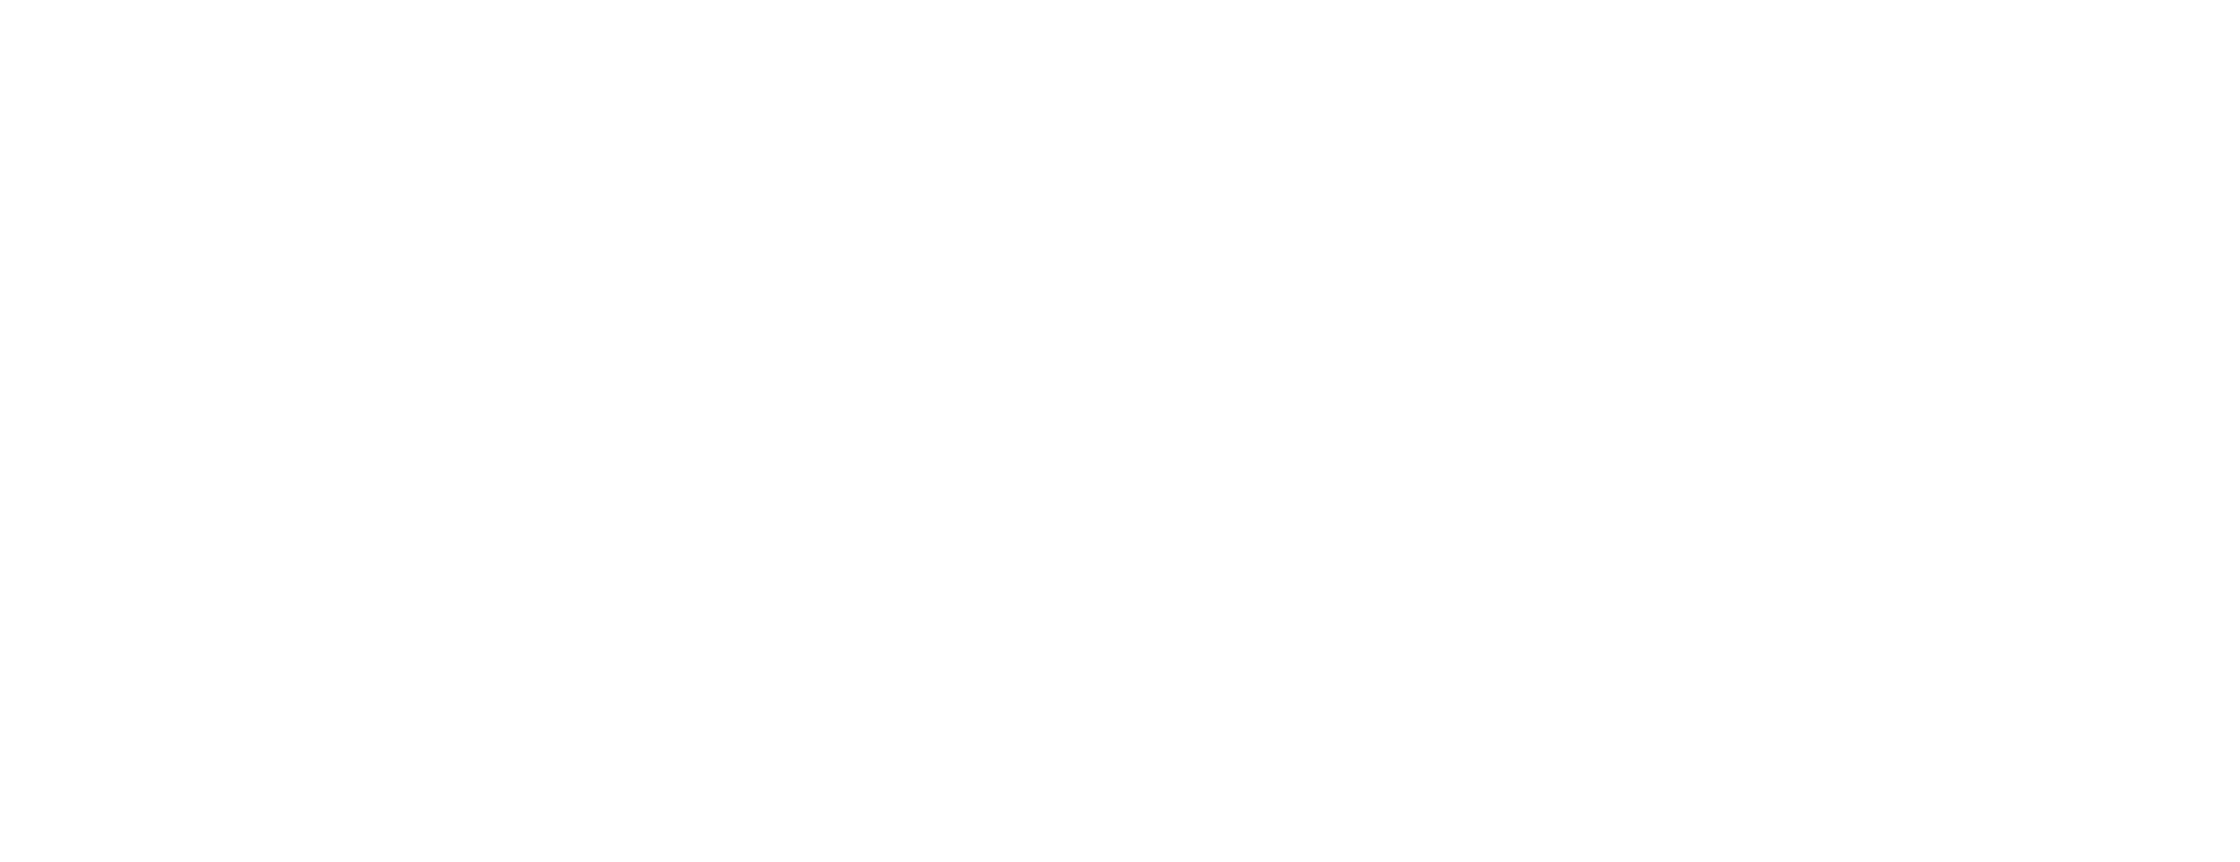 Corbella Kitchen & Bath Logo